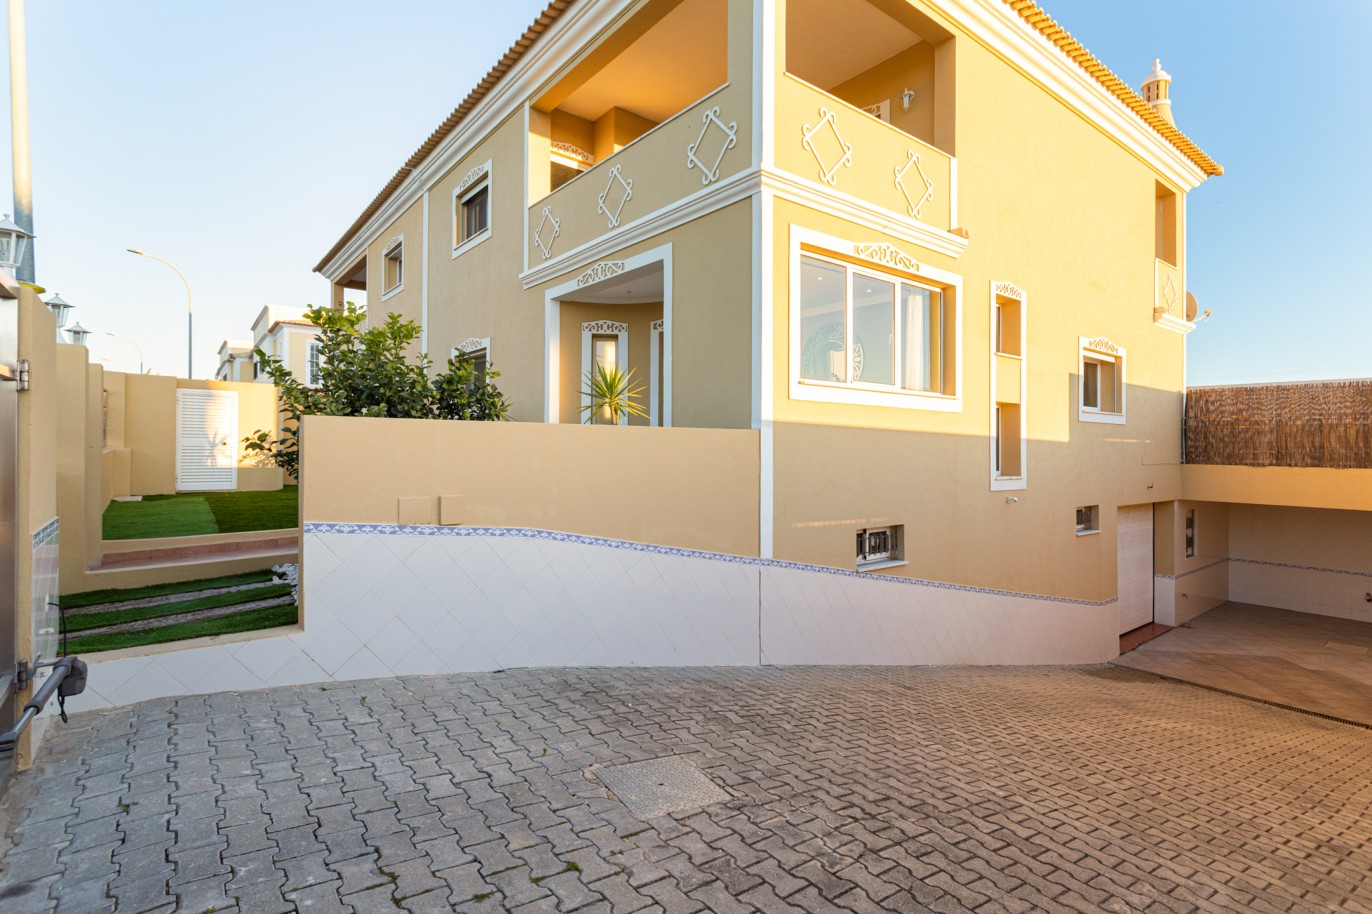 Moradia V4 em zona prestigiada, para venda em Almancil, Algarve_217648